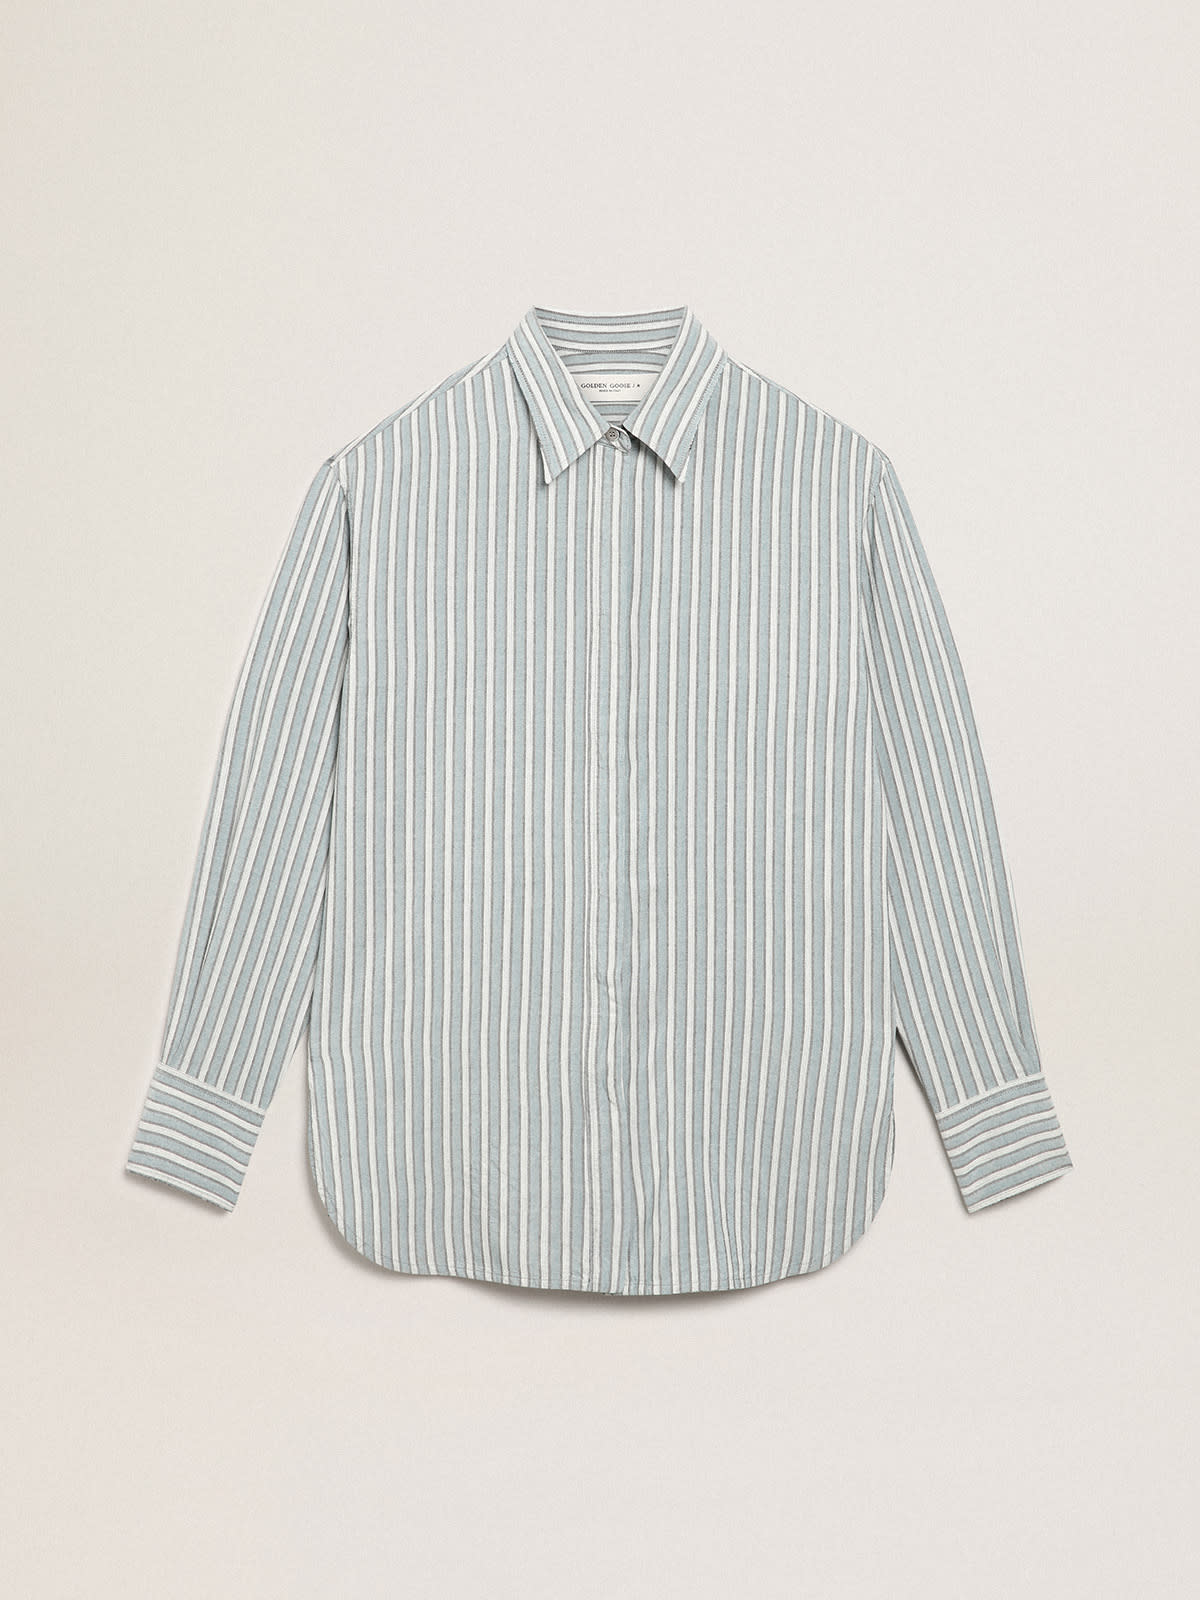 Golden Goose - Journey Collection women’s boyfriend shirt with aqua stripes in 